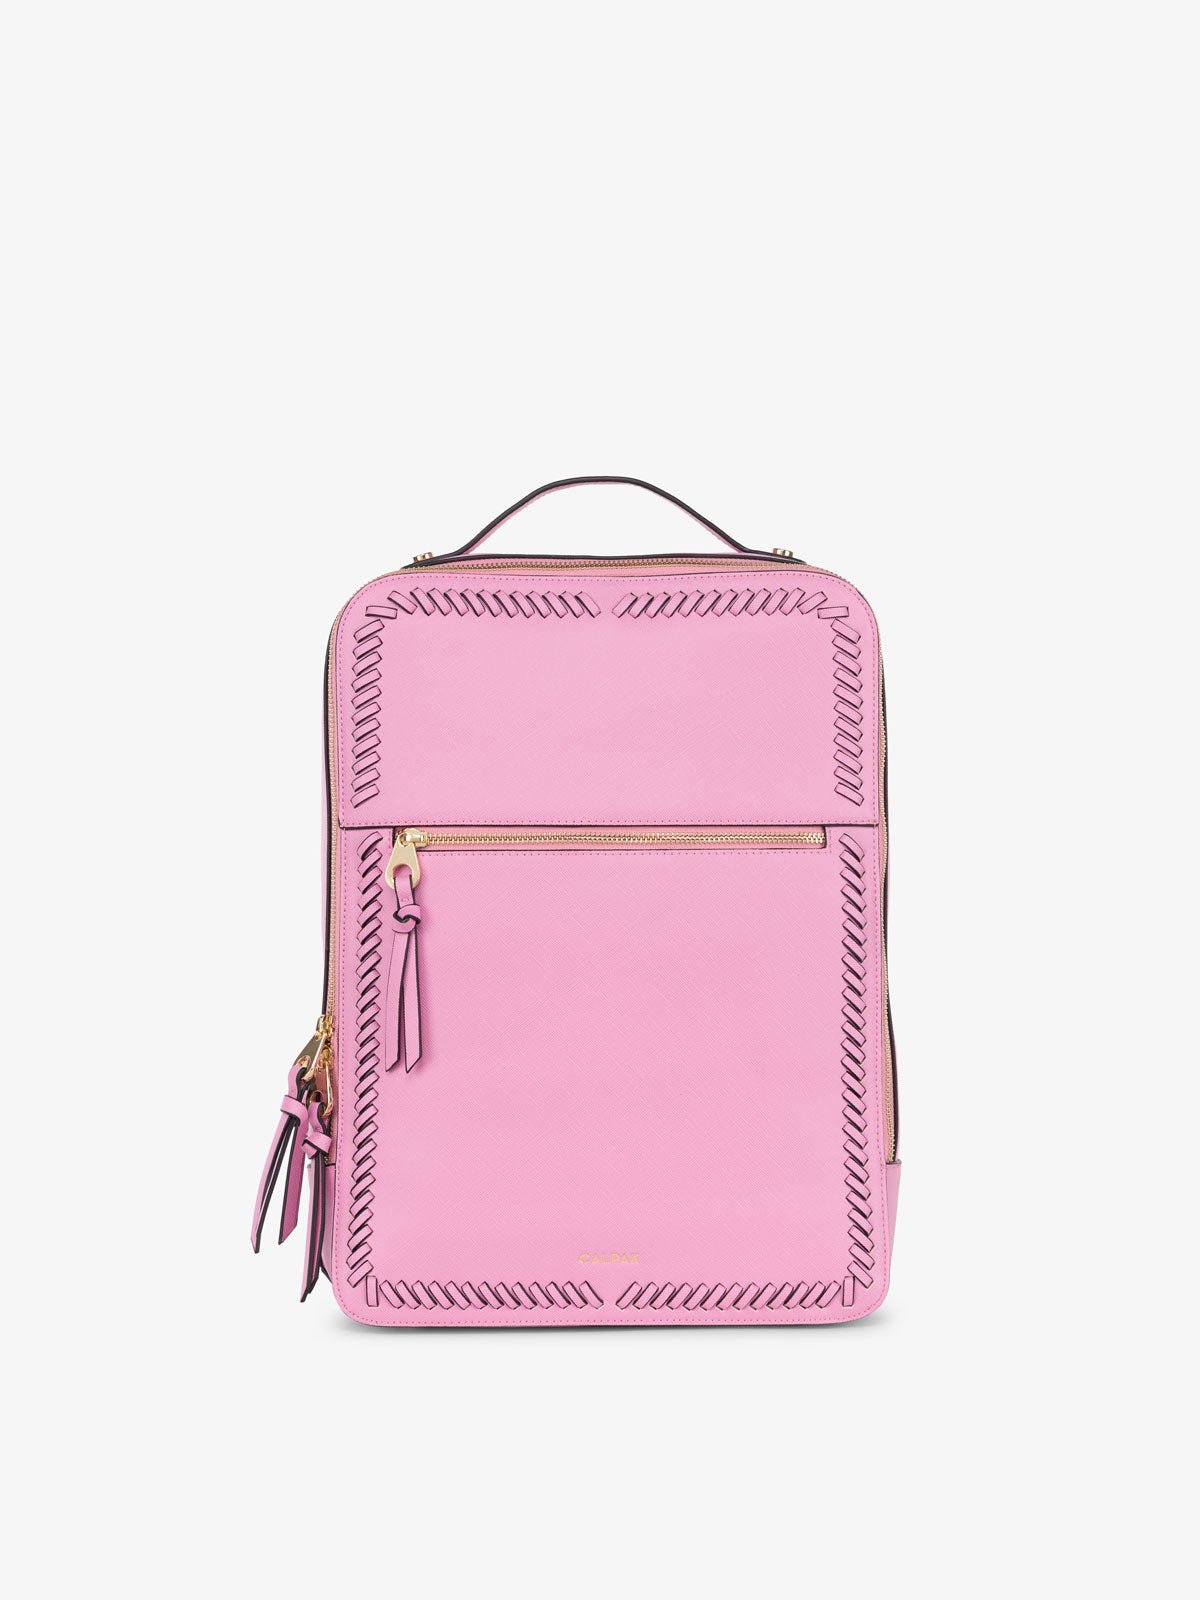 CALPAK Kaya laptop backpack in pink guava